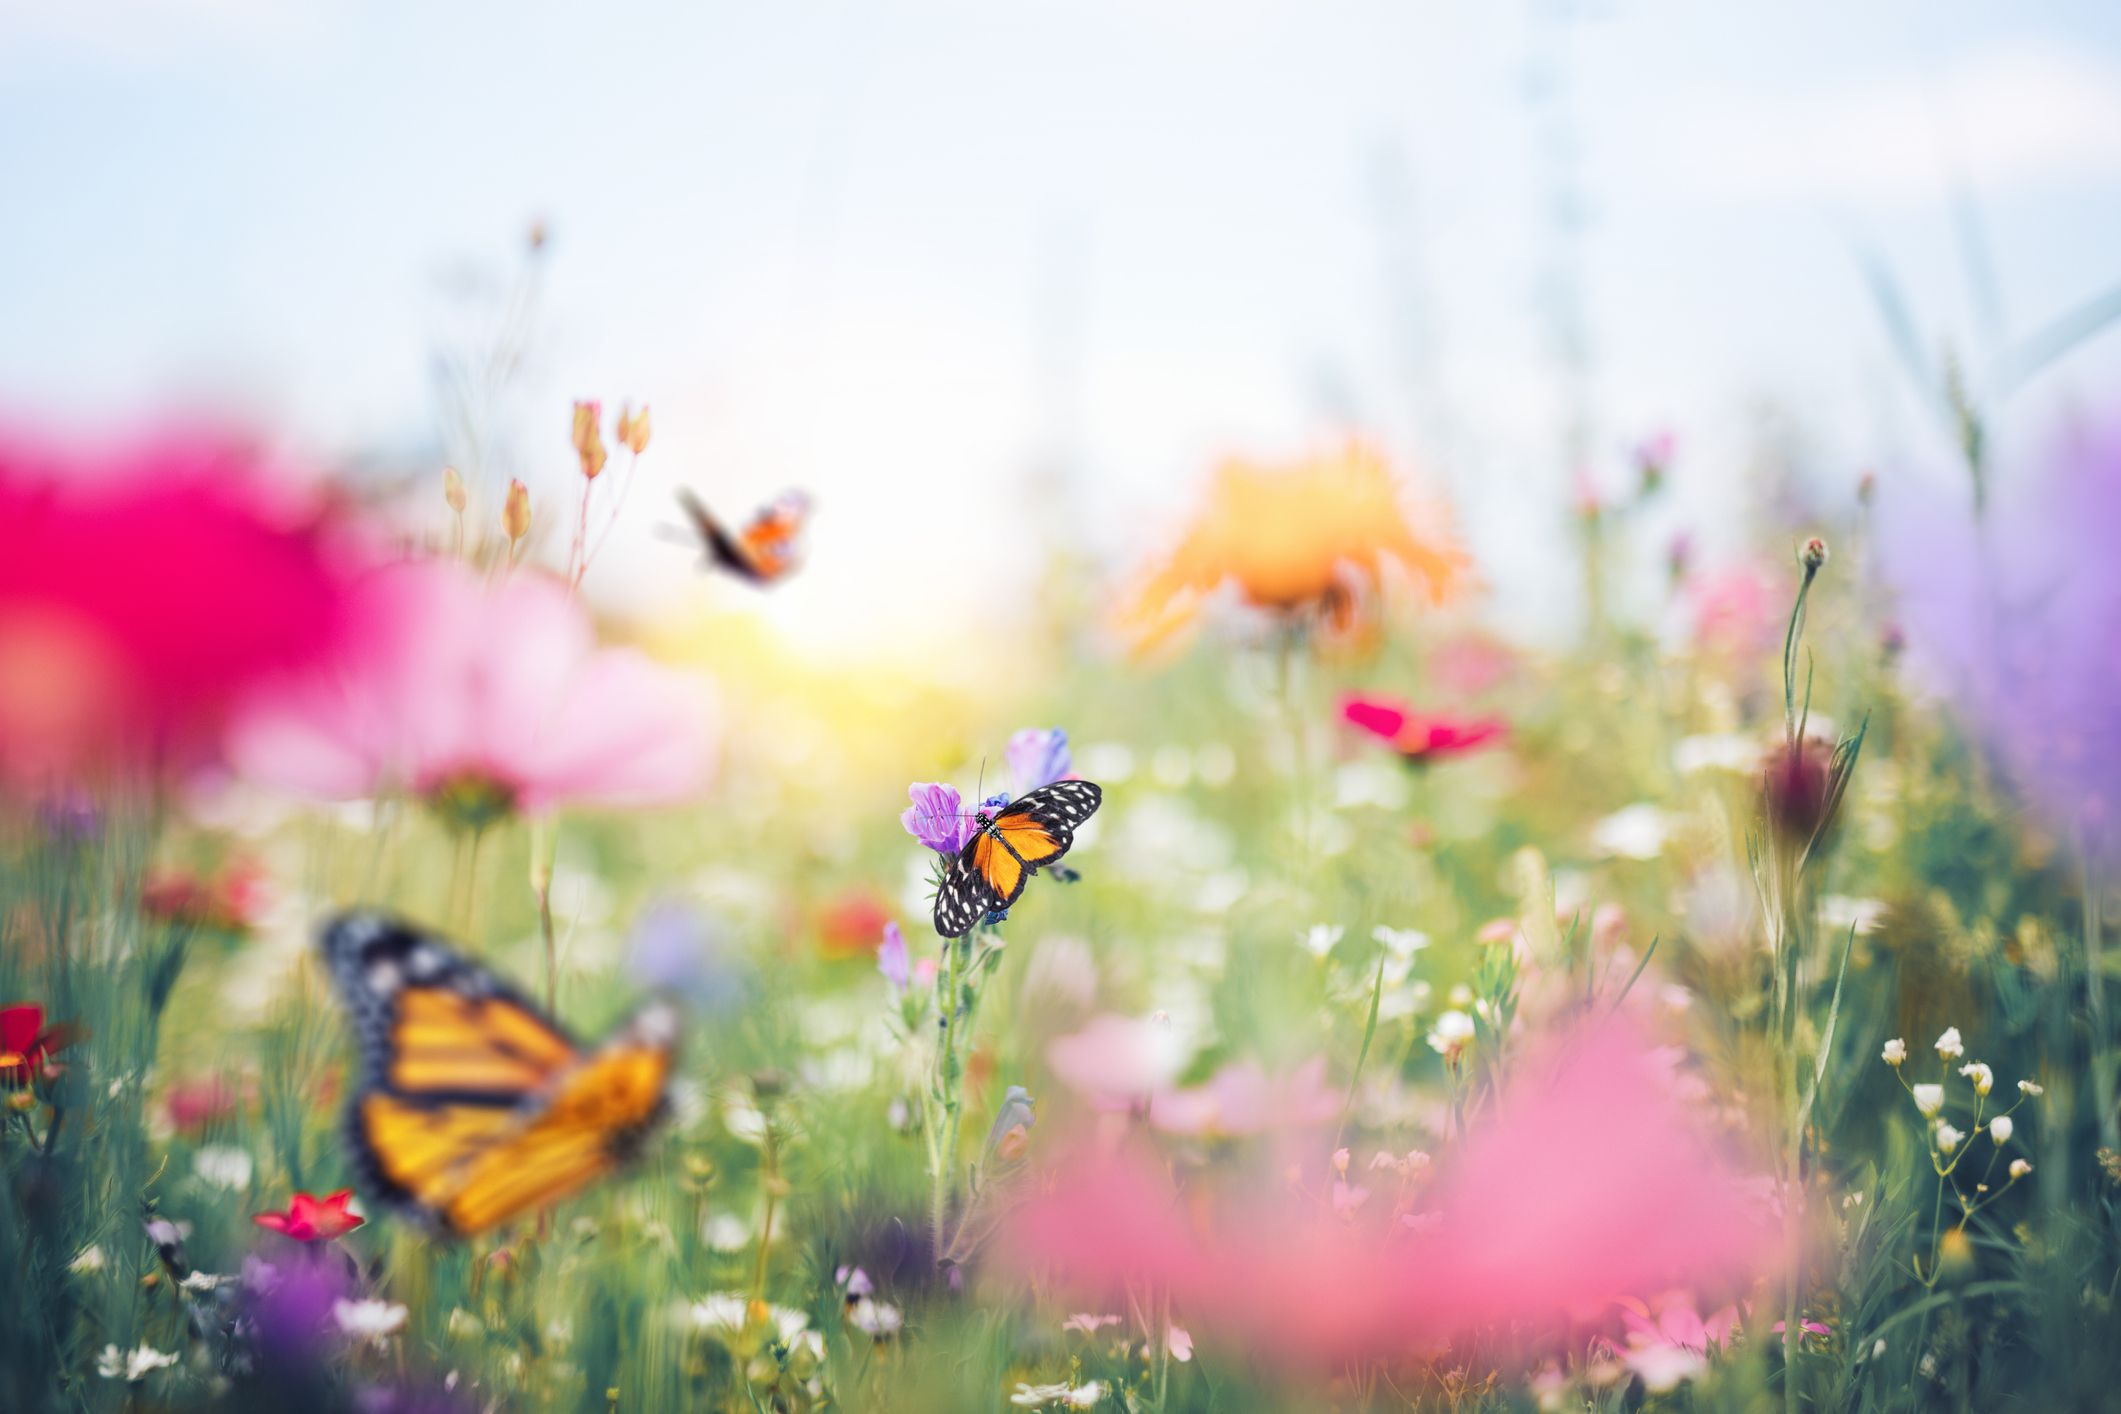 Attracting Butterflies and Hummingbirds to Your Garden